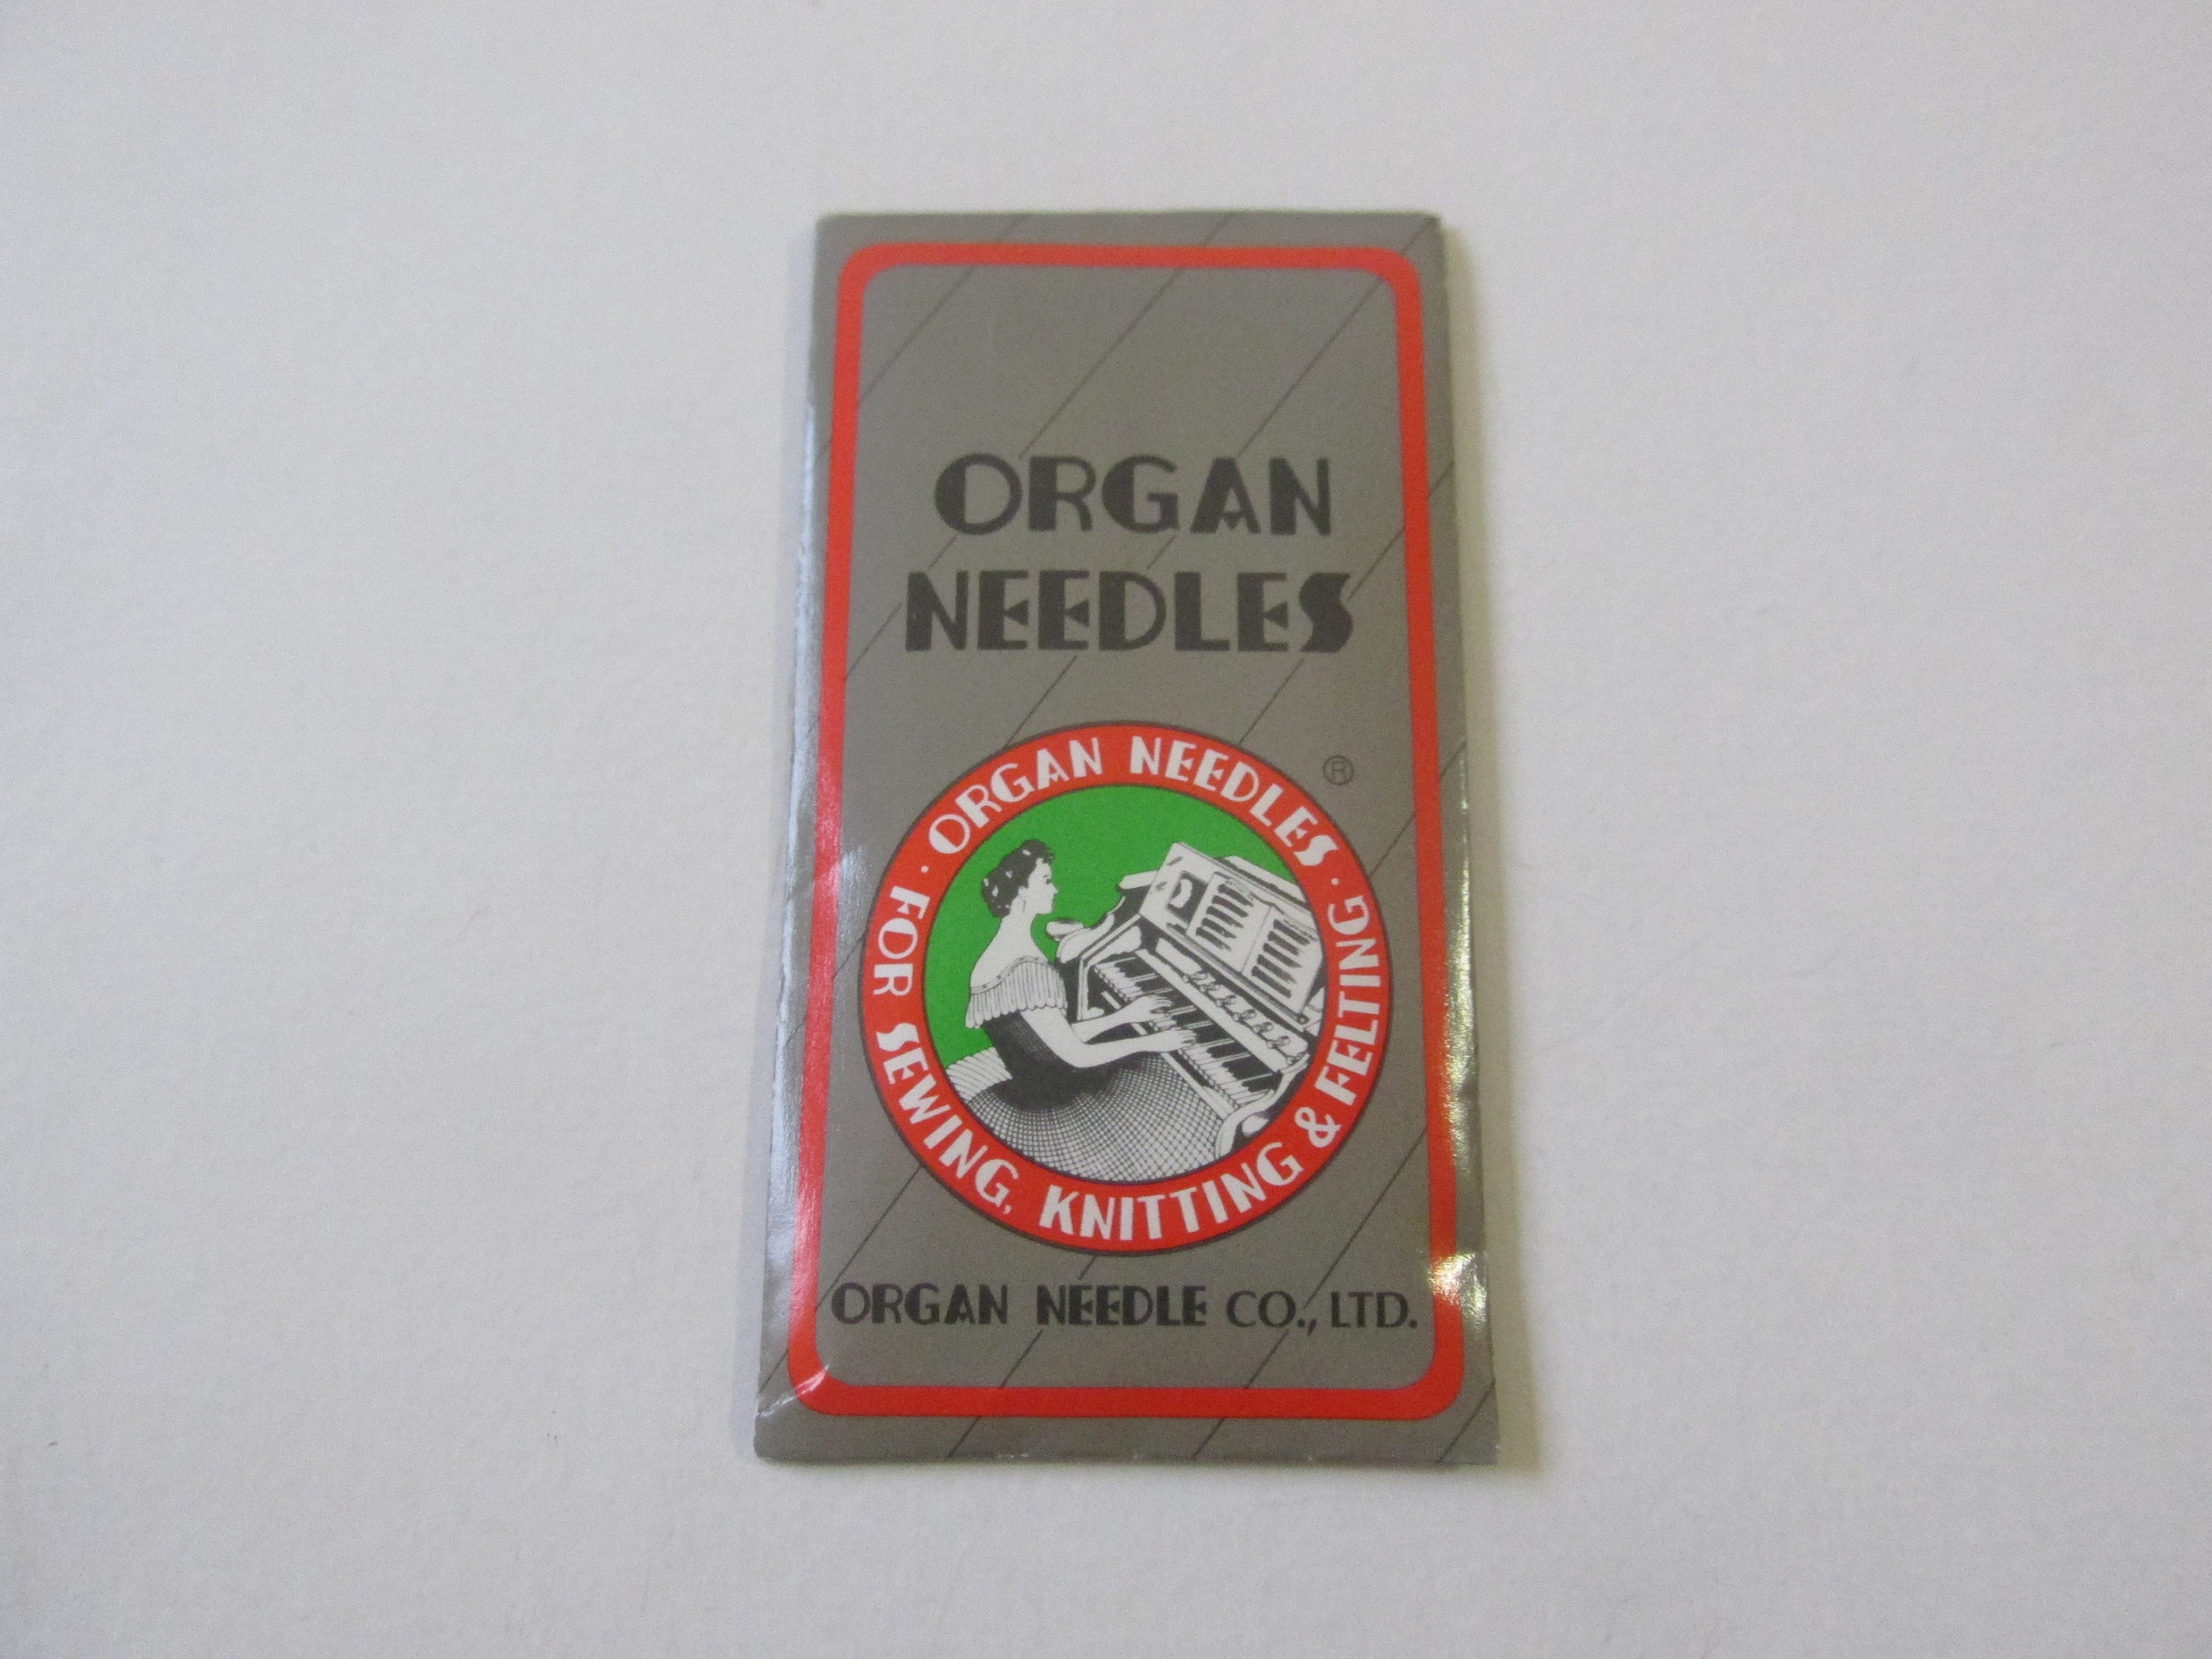 Organ Universal Heavy Duty Sewing Machine Needles, 15-Count (5